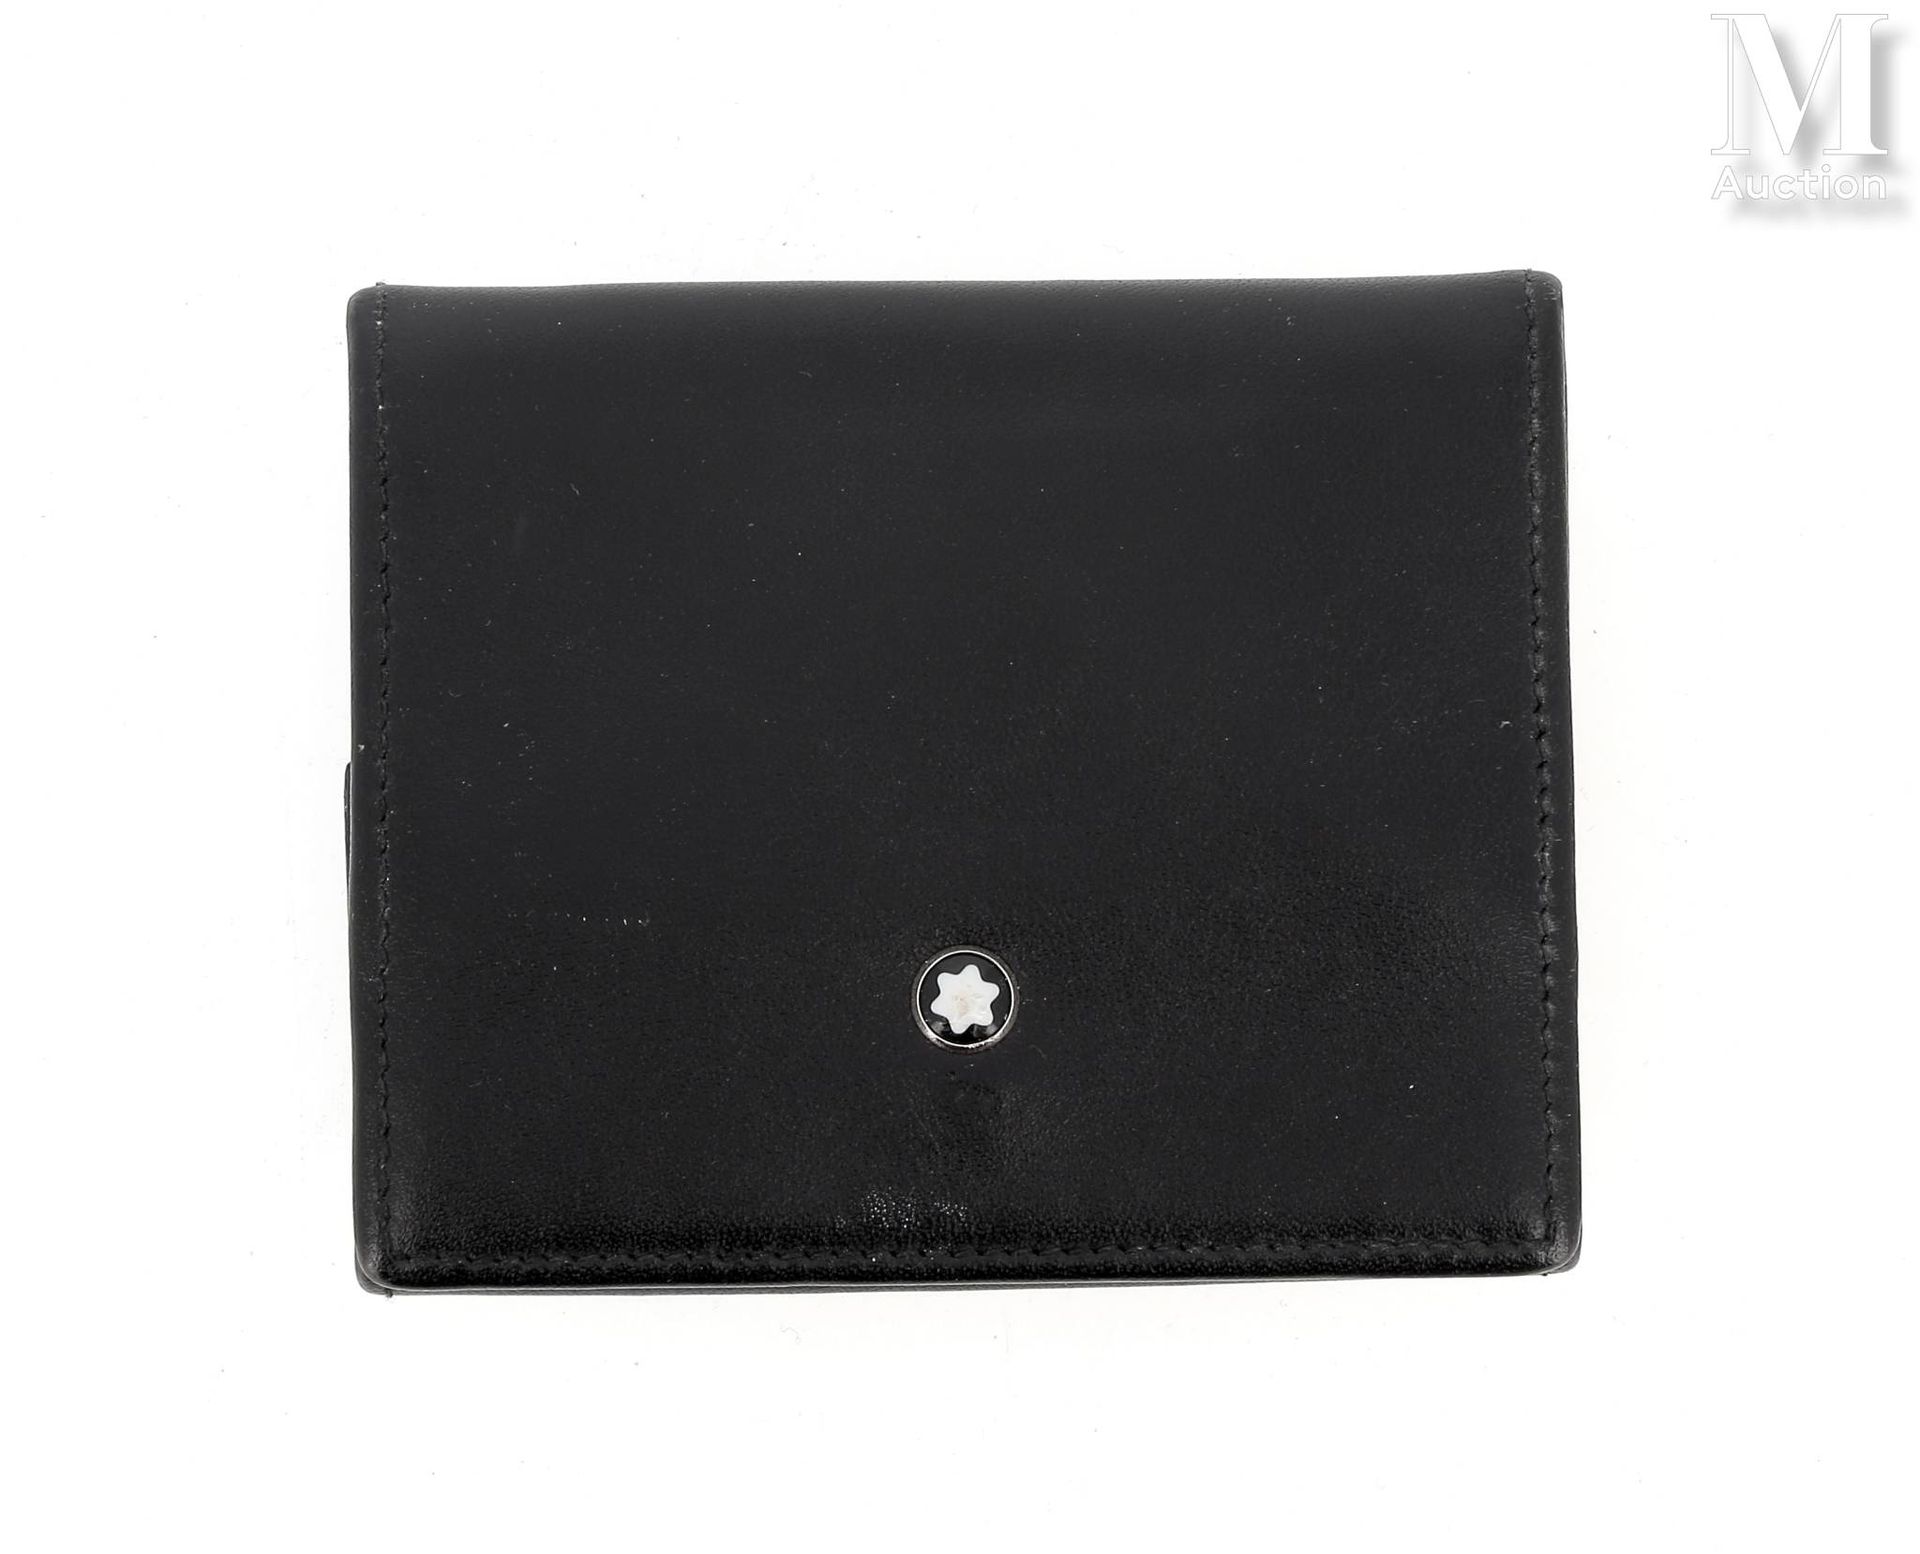 MONTBLANC Black leather wallet
MONTBLANC
Black leather wallet
70 x 87 mm
Slight &hellip;